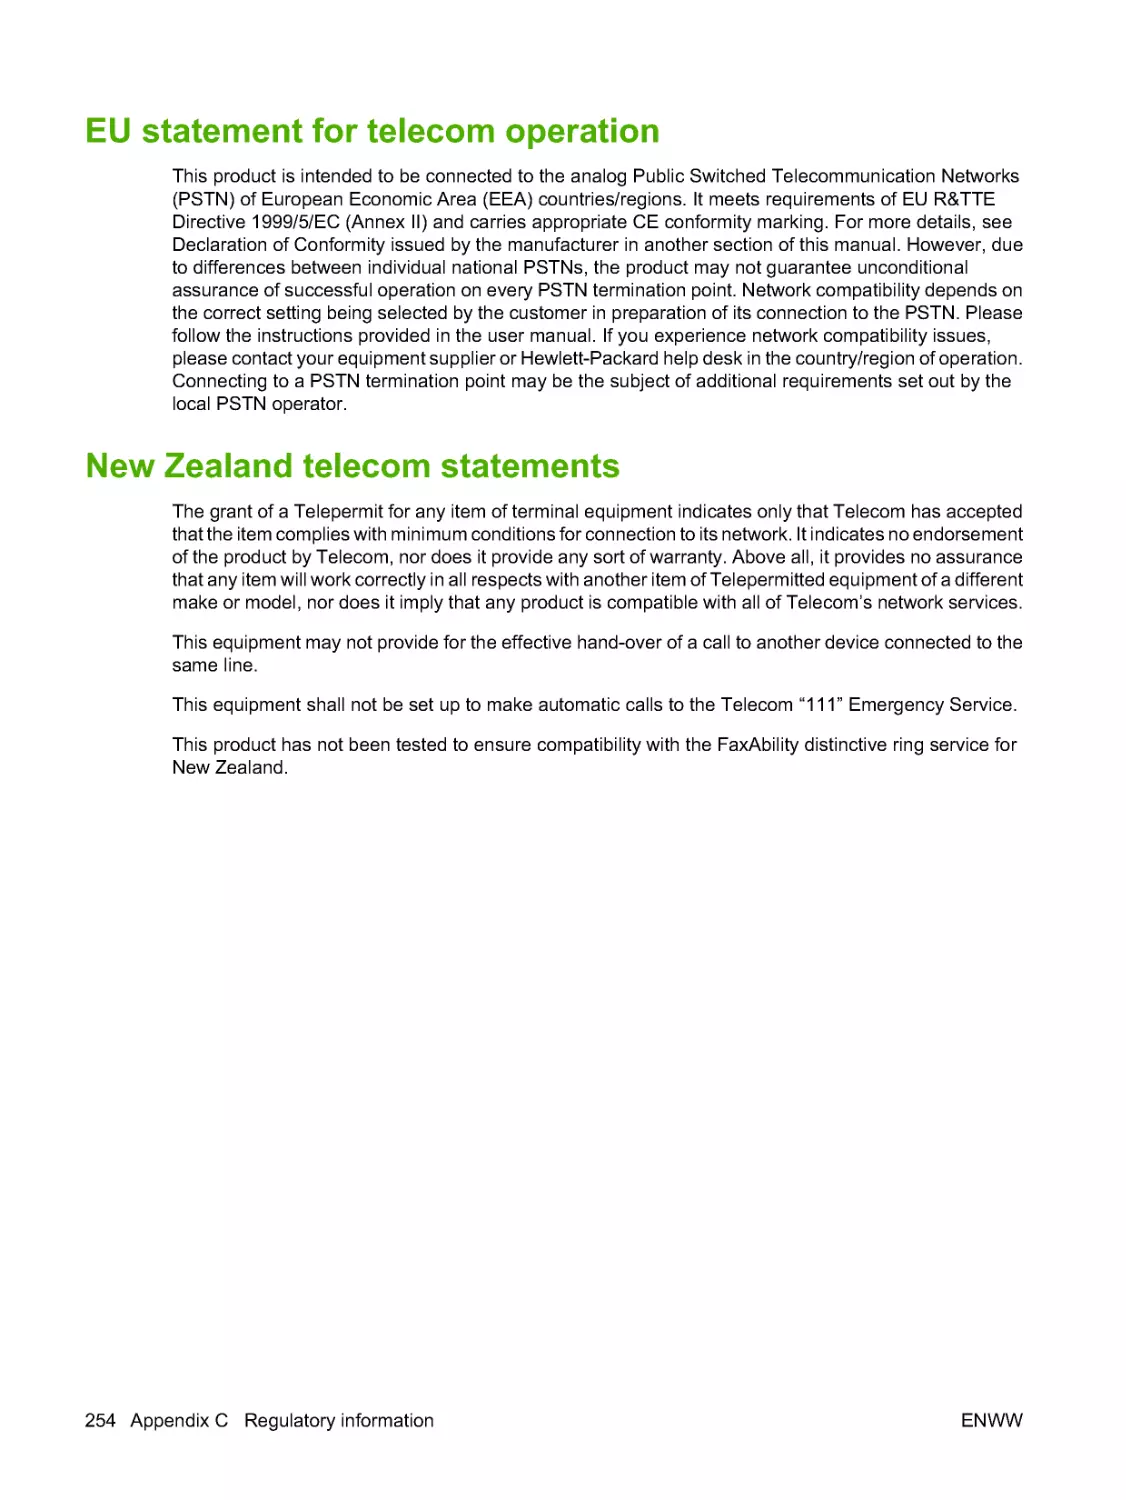 EU statement for telecom operation
New Zealand telecom statements